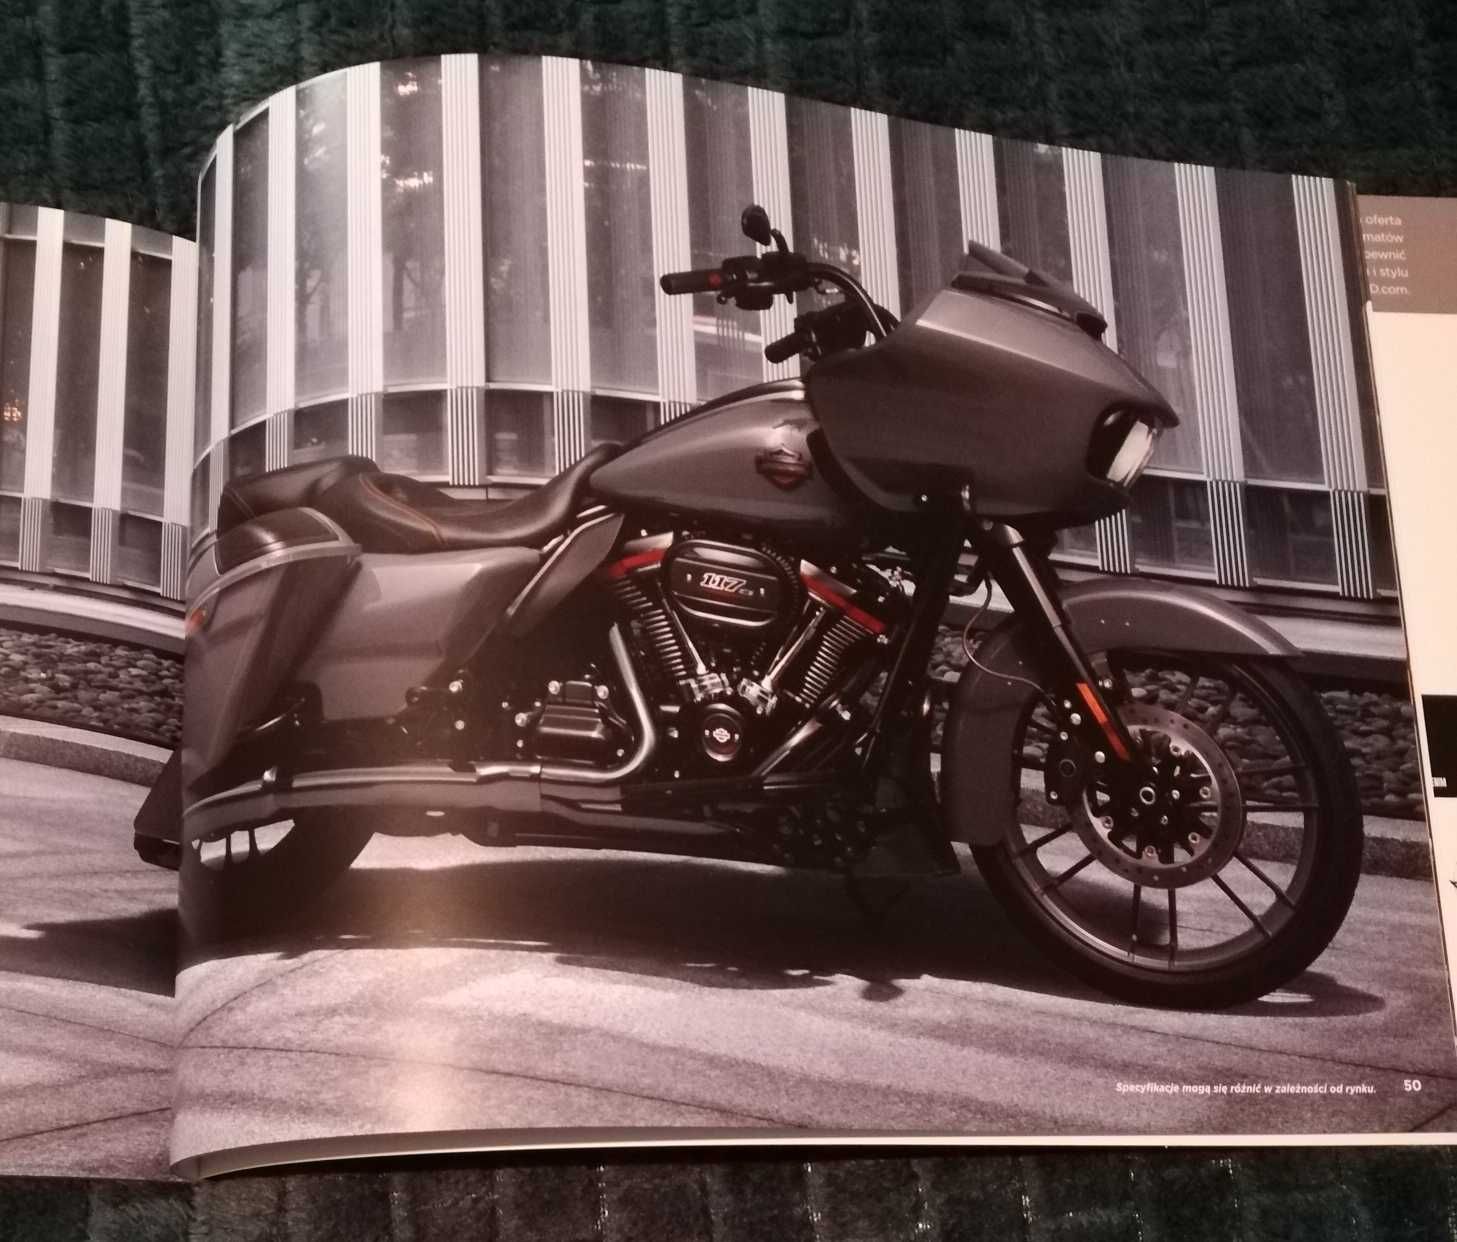 Prospekt Harley Davidson 2018 katalog